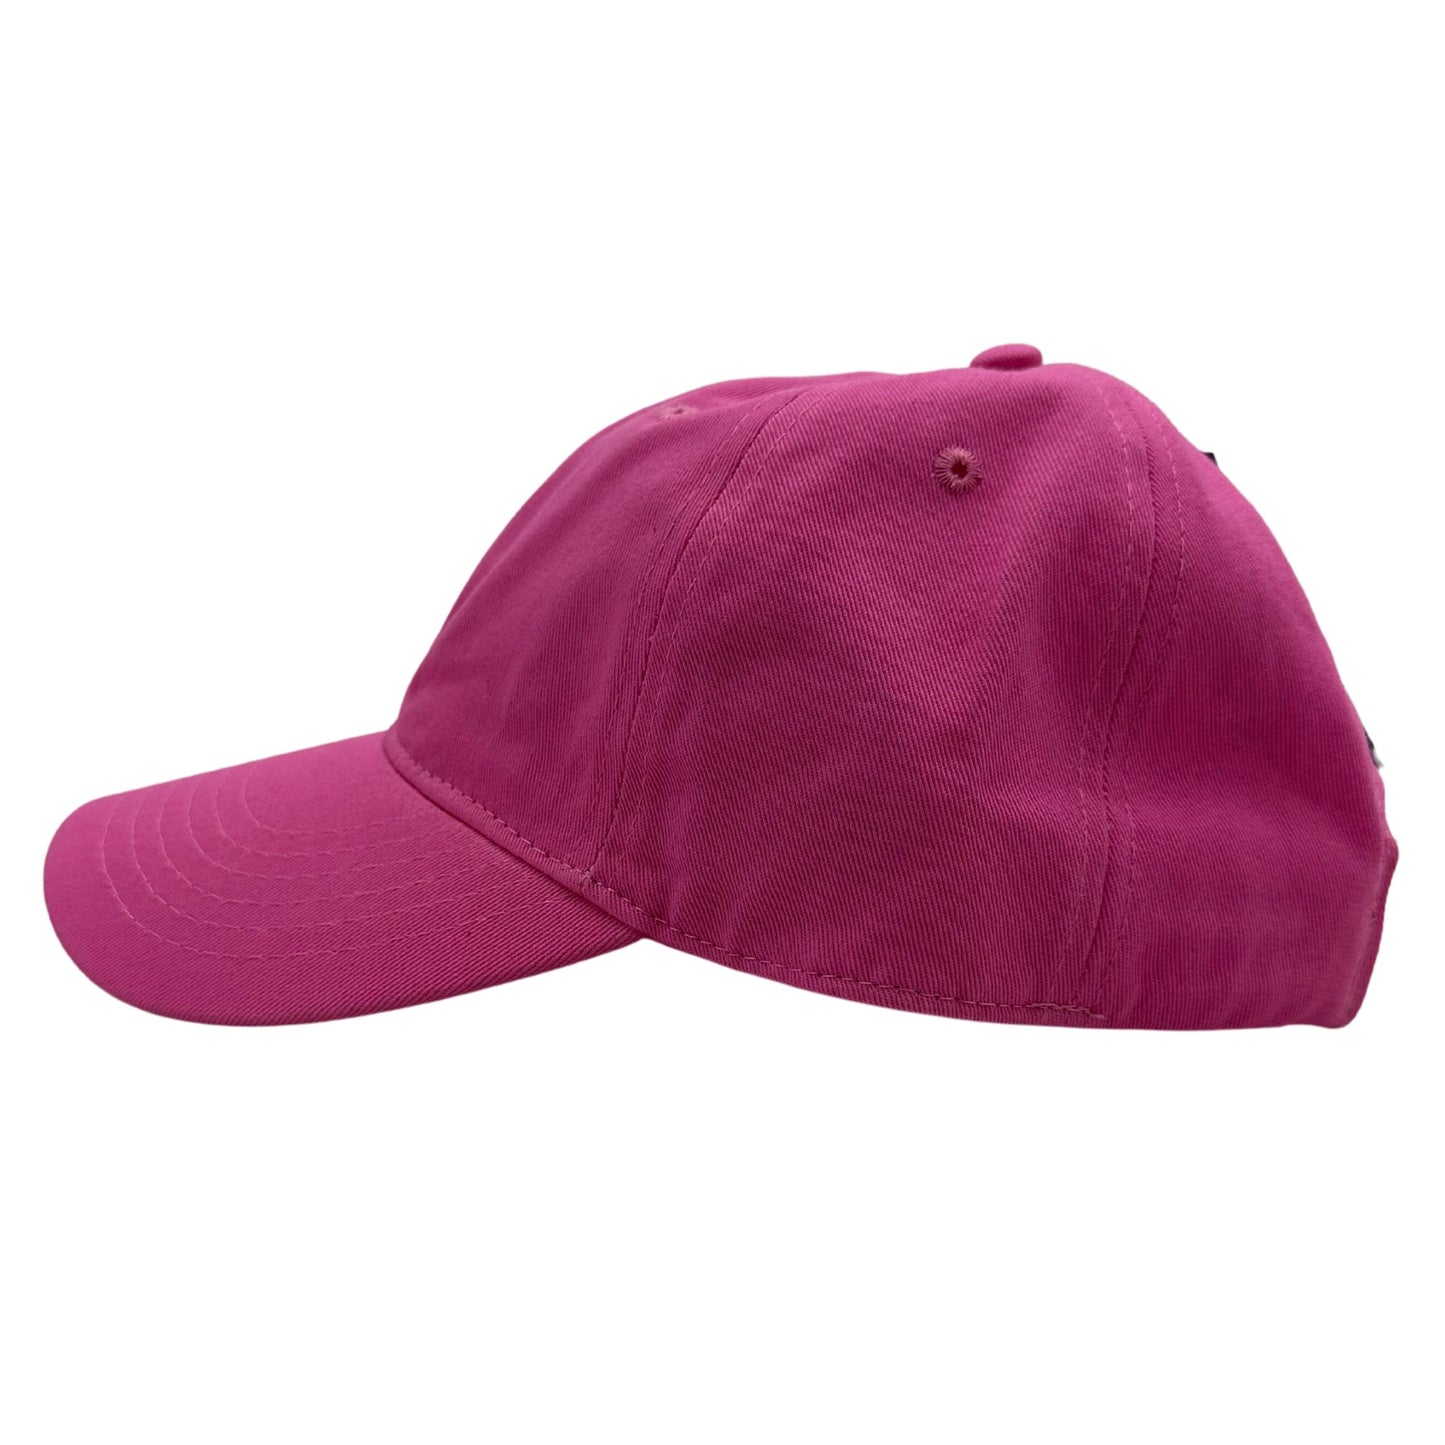 U.S. Polo Assn. Pink Unisex Adjustable Pink Hat